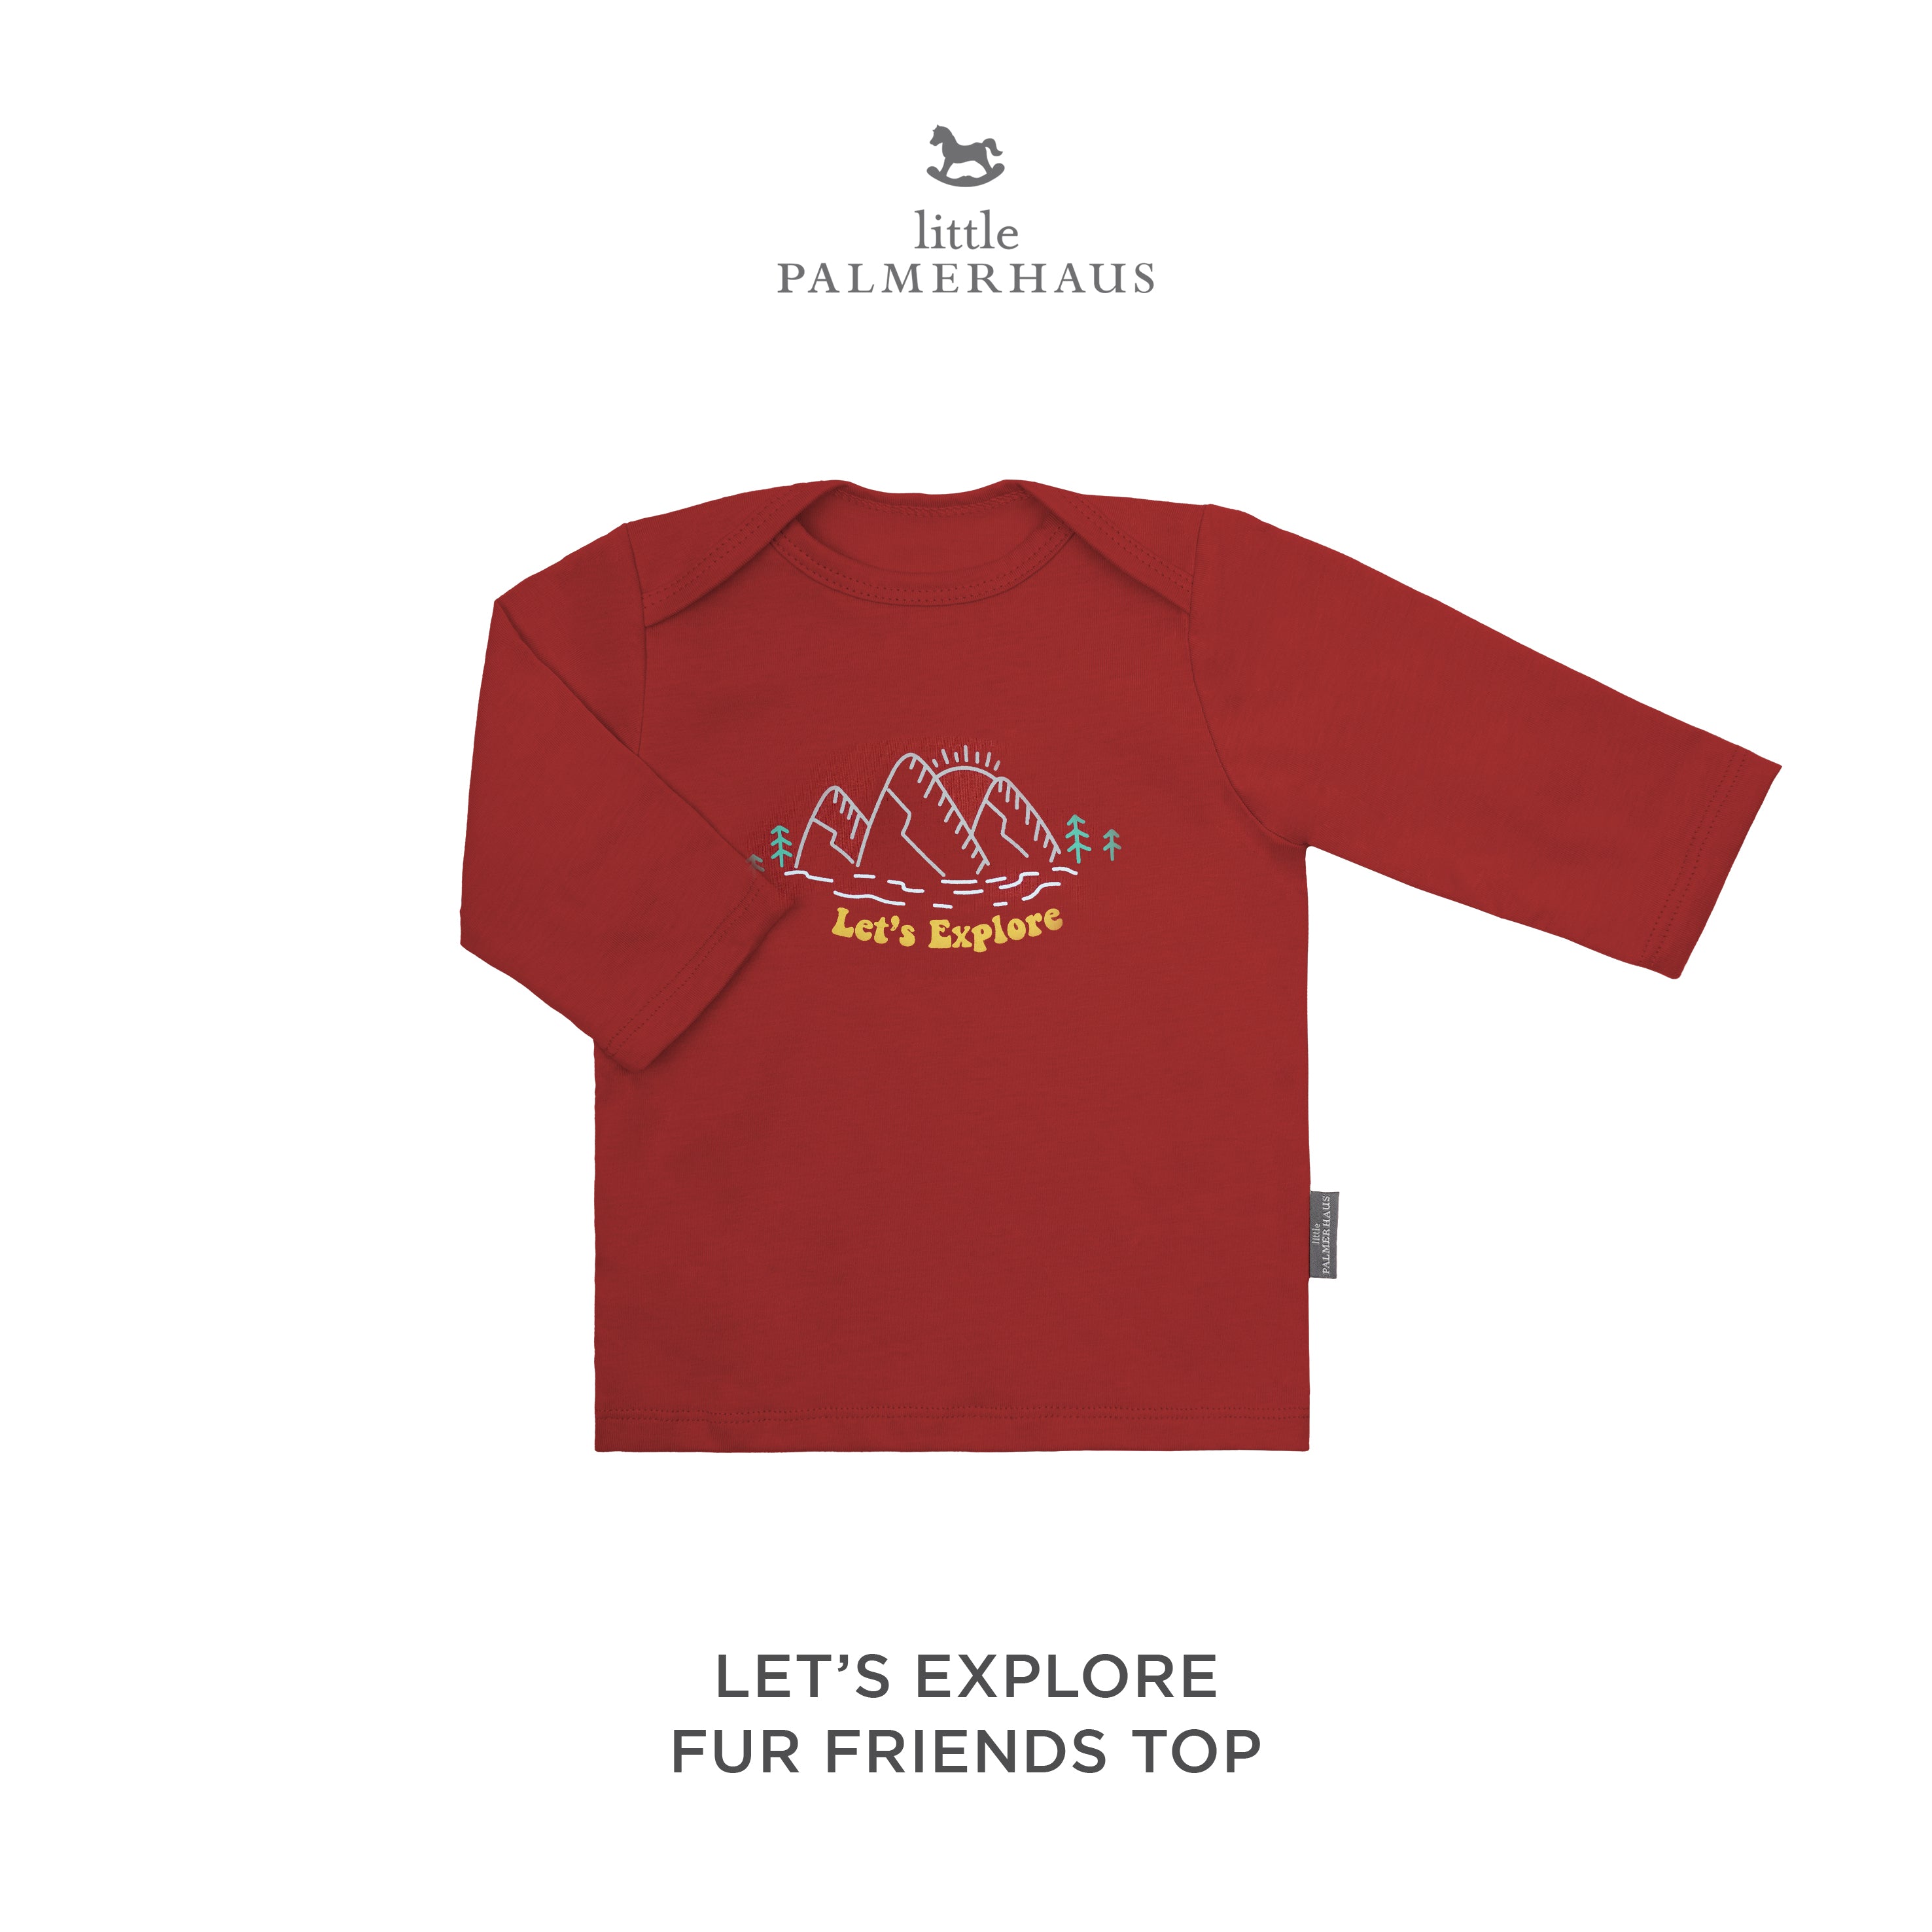 Fur Friends Top